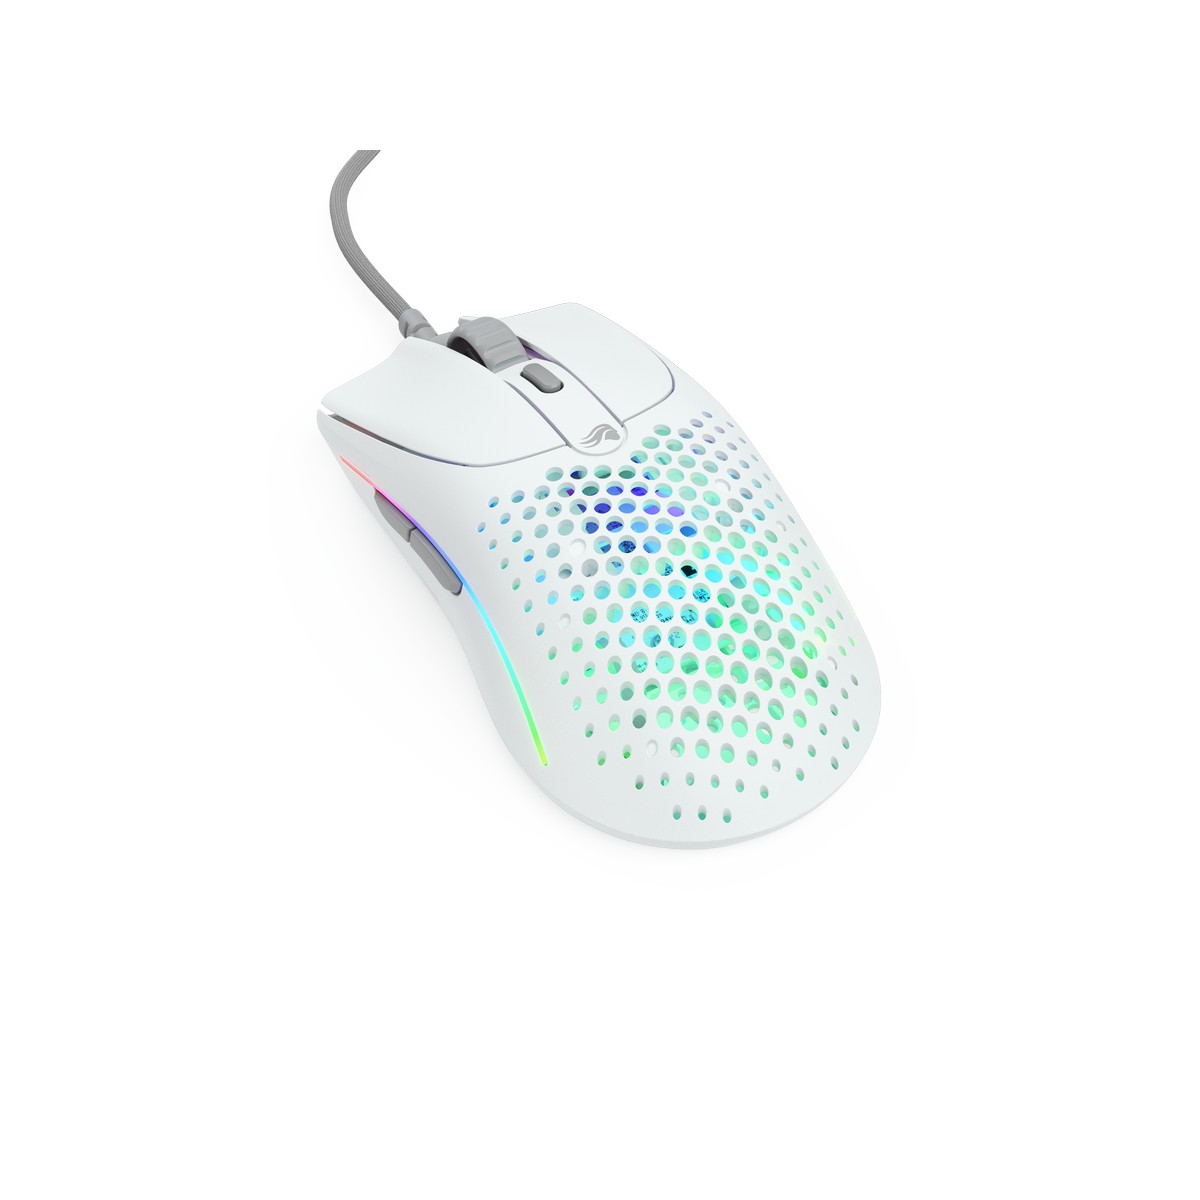 Glorious Model O 2 USB RGB Optical Gaming Mouse - Matte White (GLO-MS-OV2-MW)